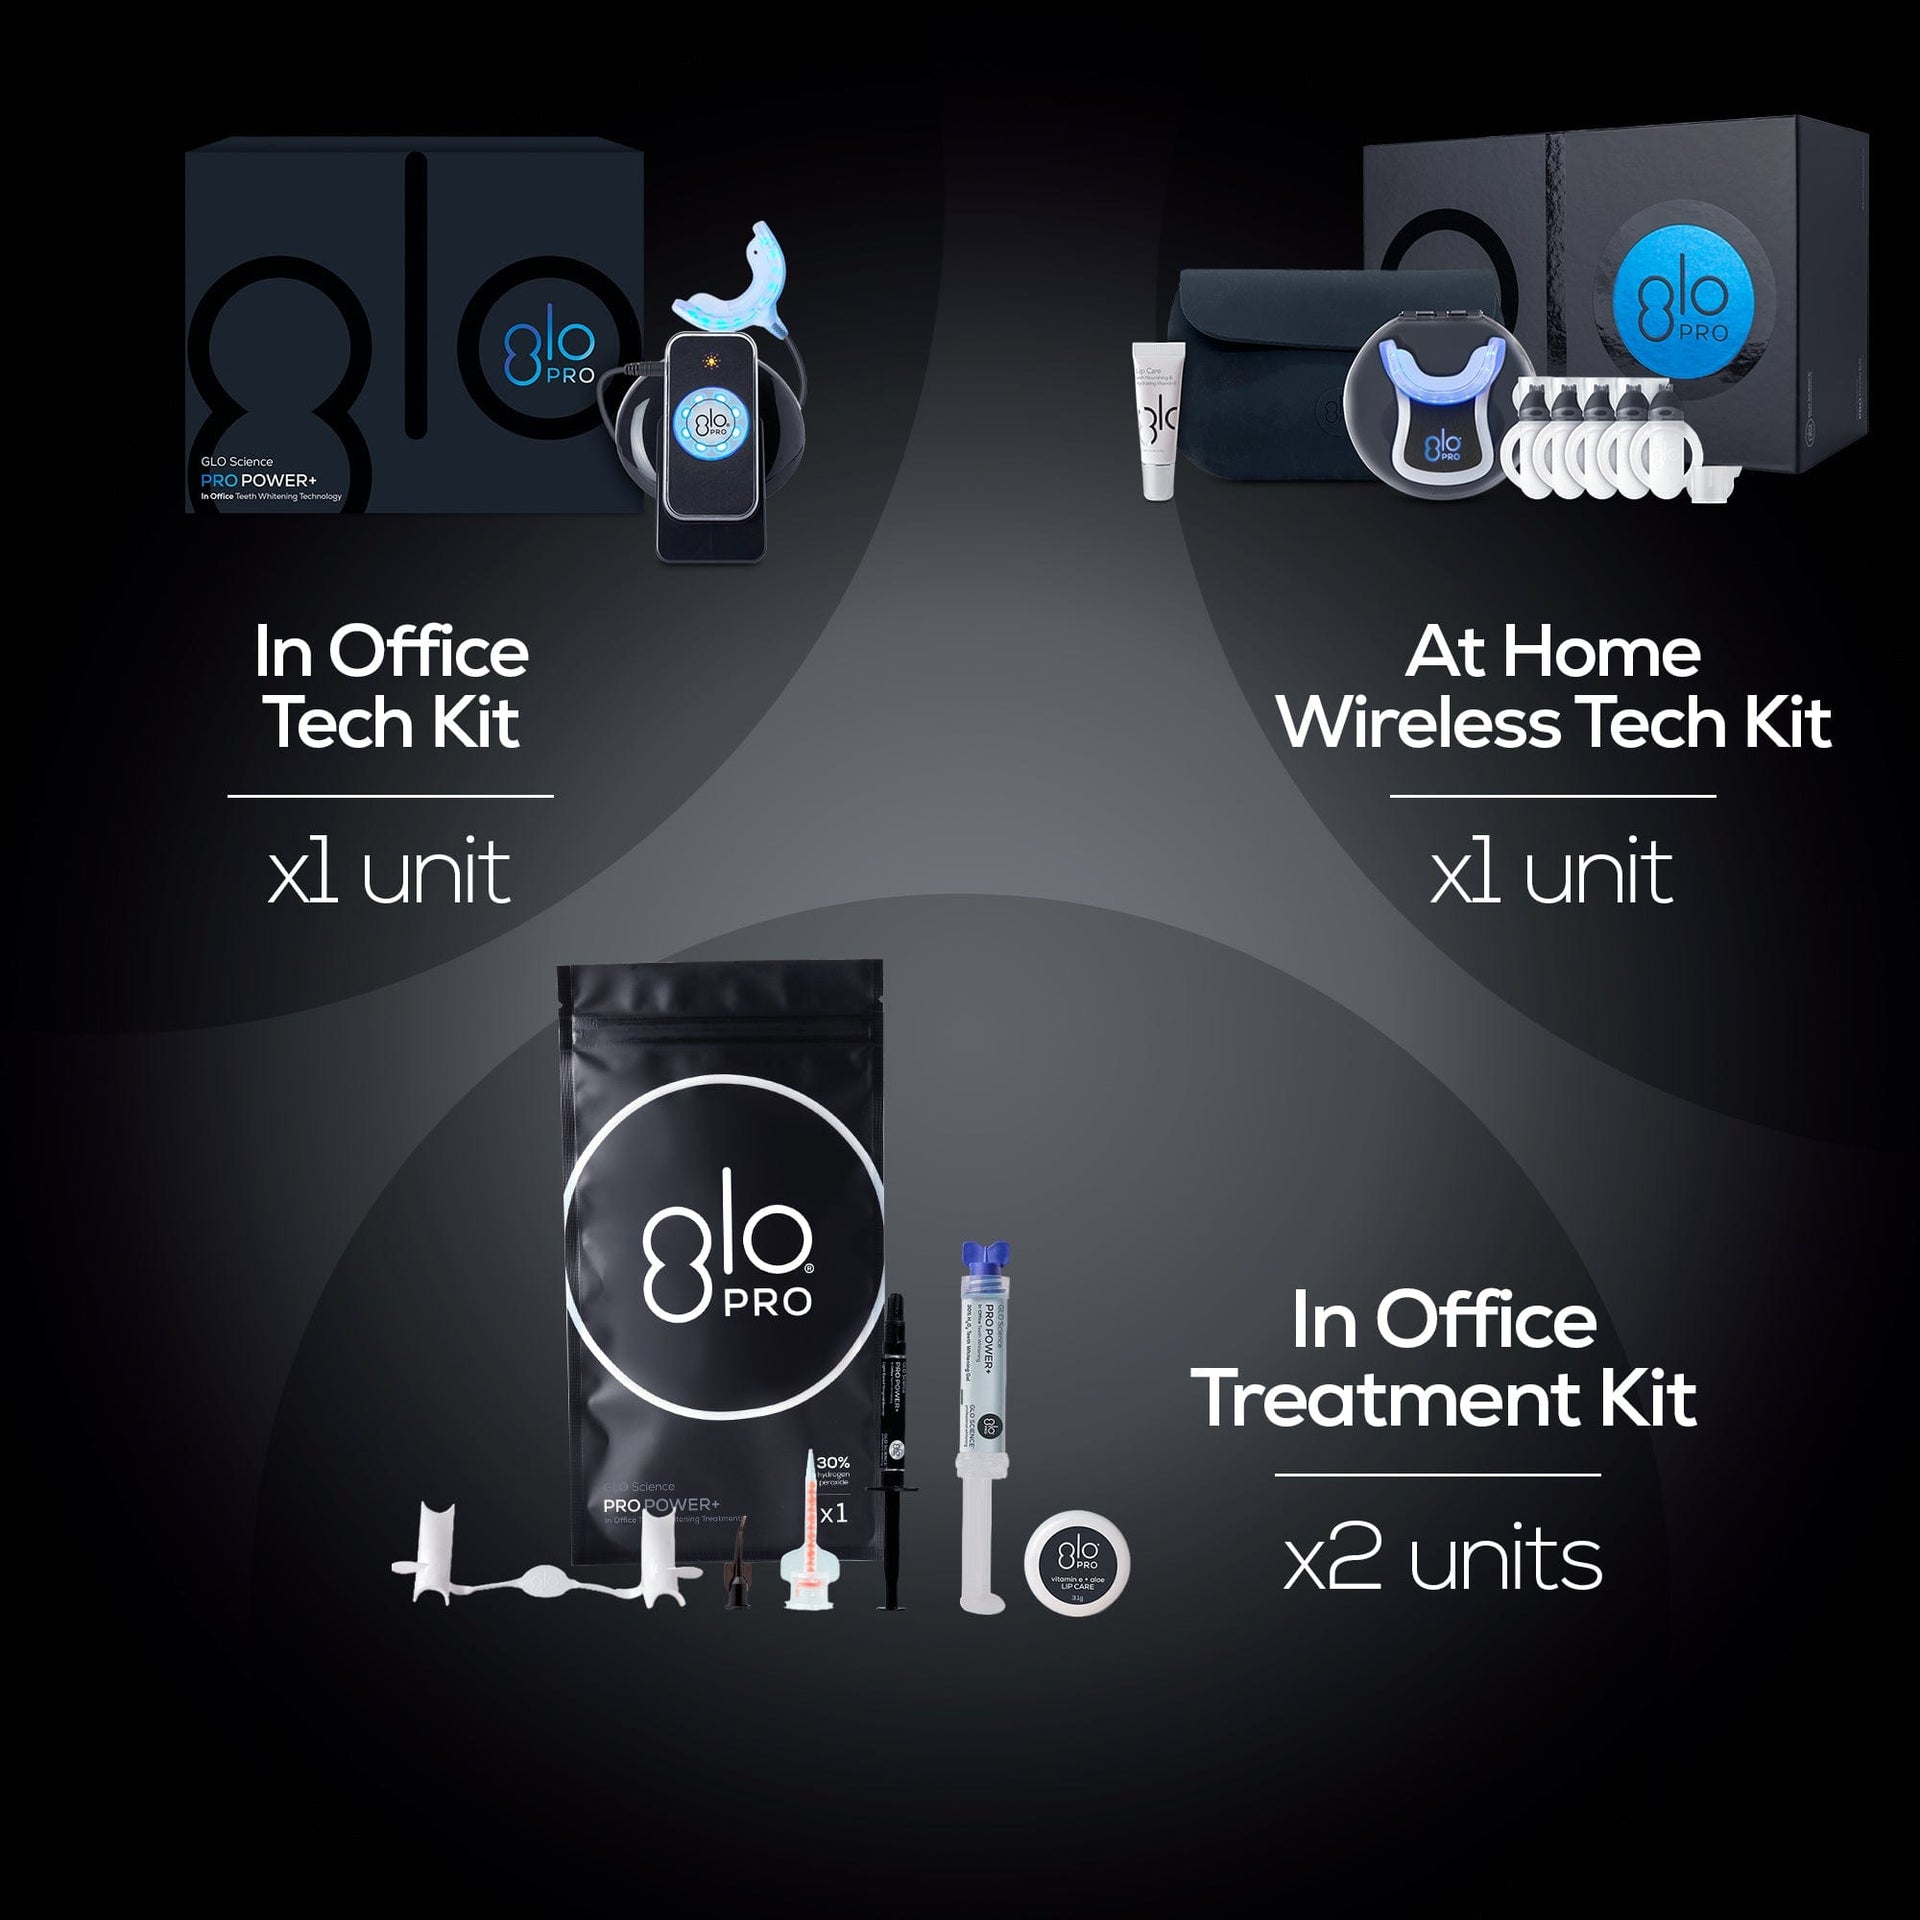 GLO POWER+ Dual Trial Kit